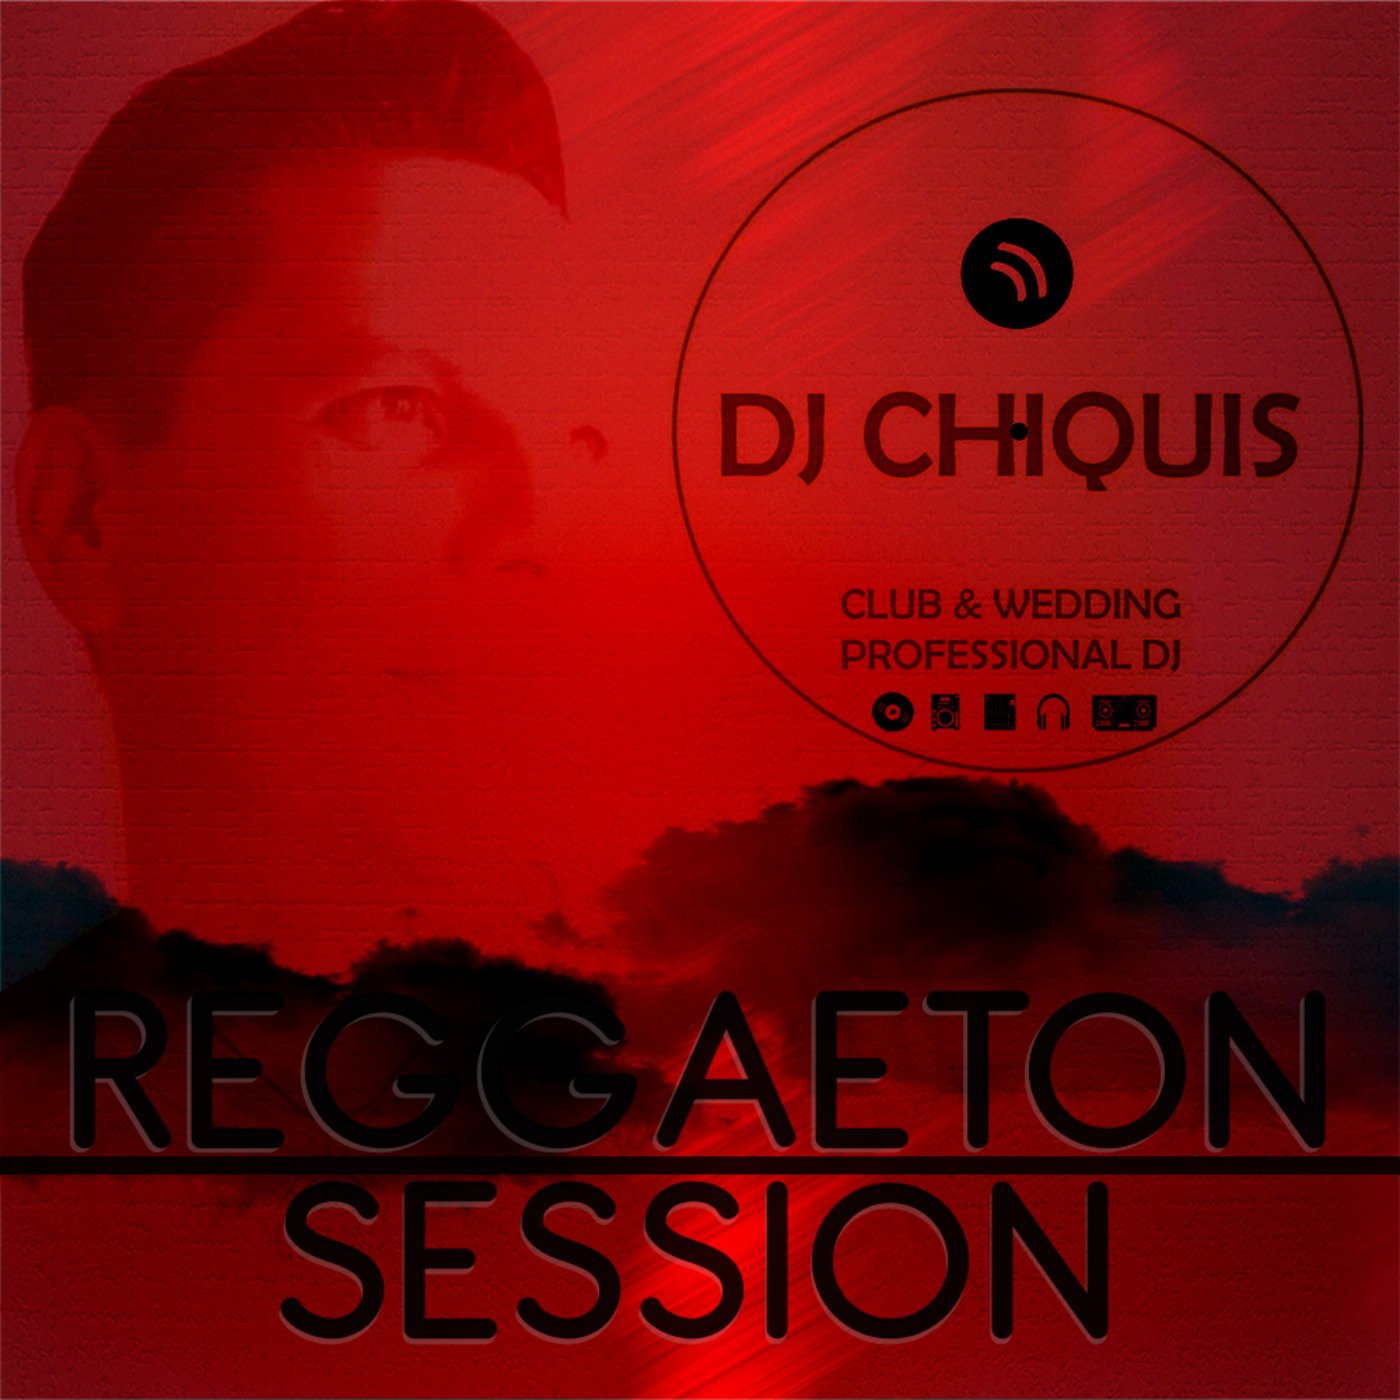 REGGAETON CLEAN DJ CHIQUIS SESSION